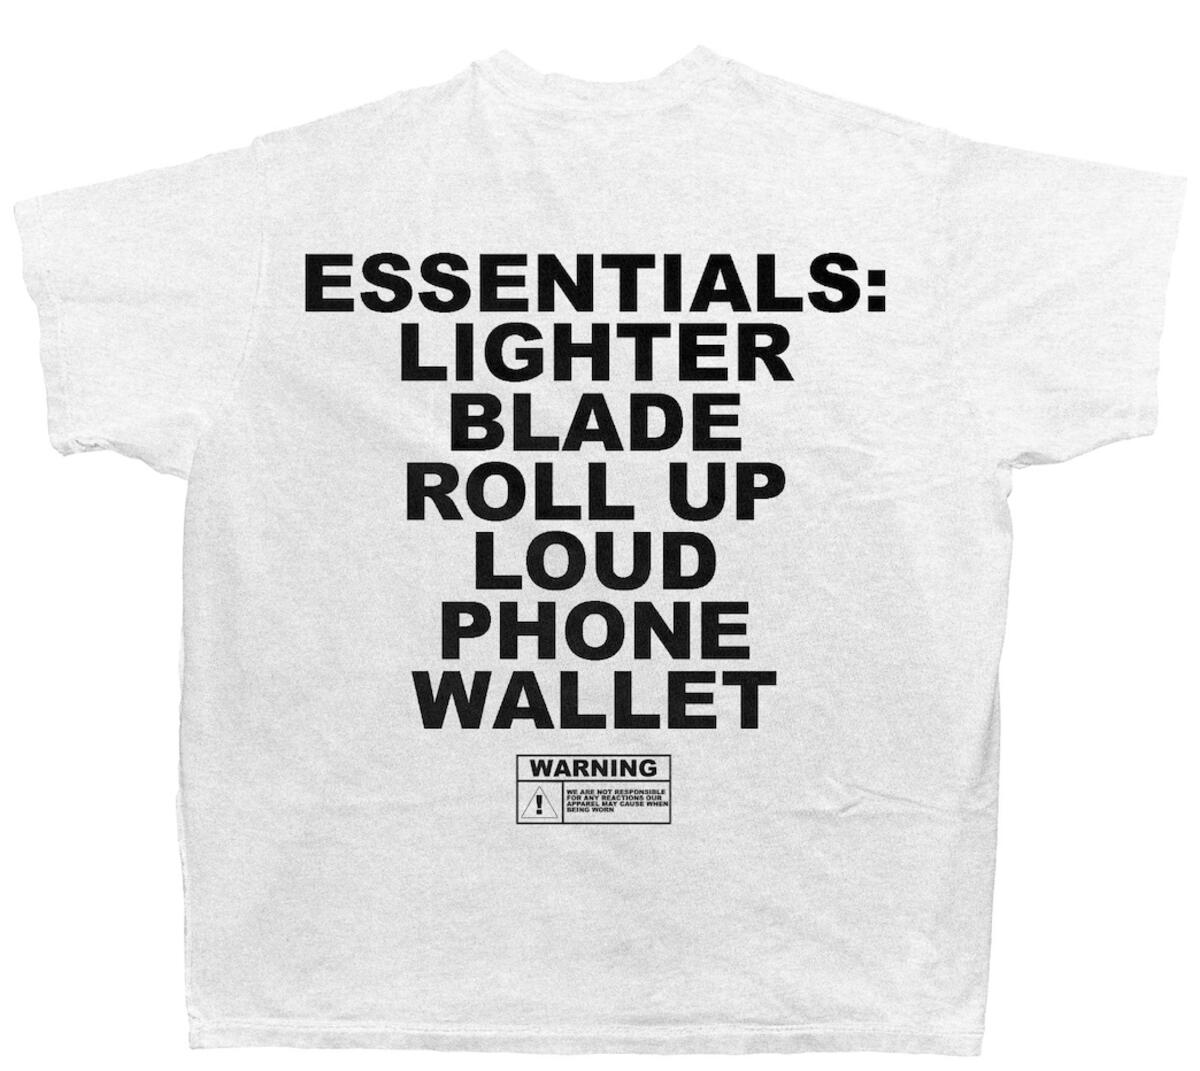 Rad Boyz Essentials T-Shirt White